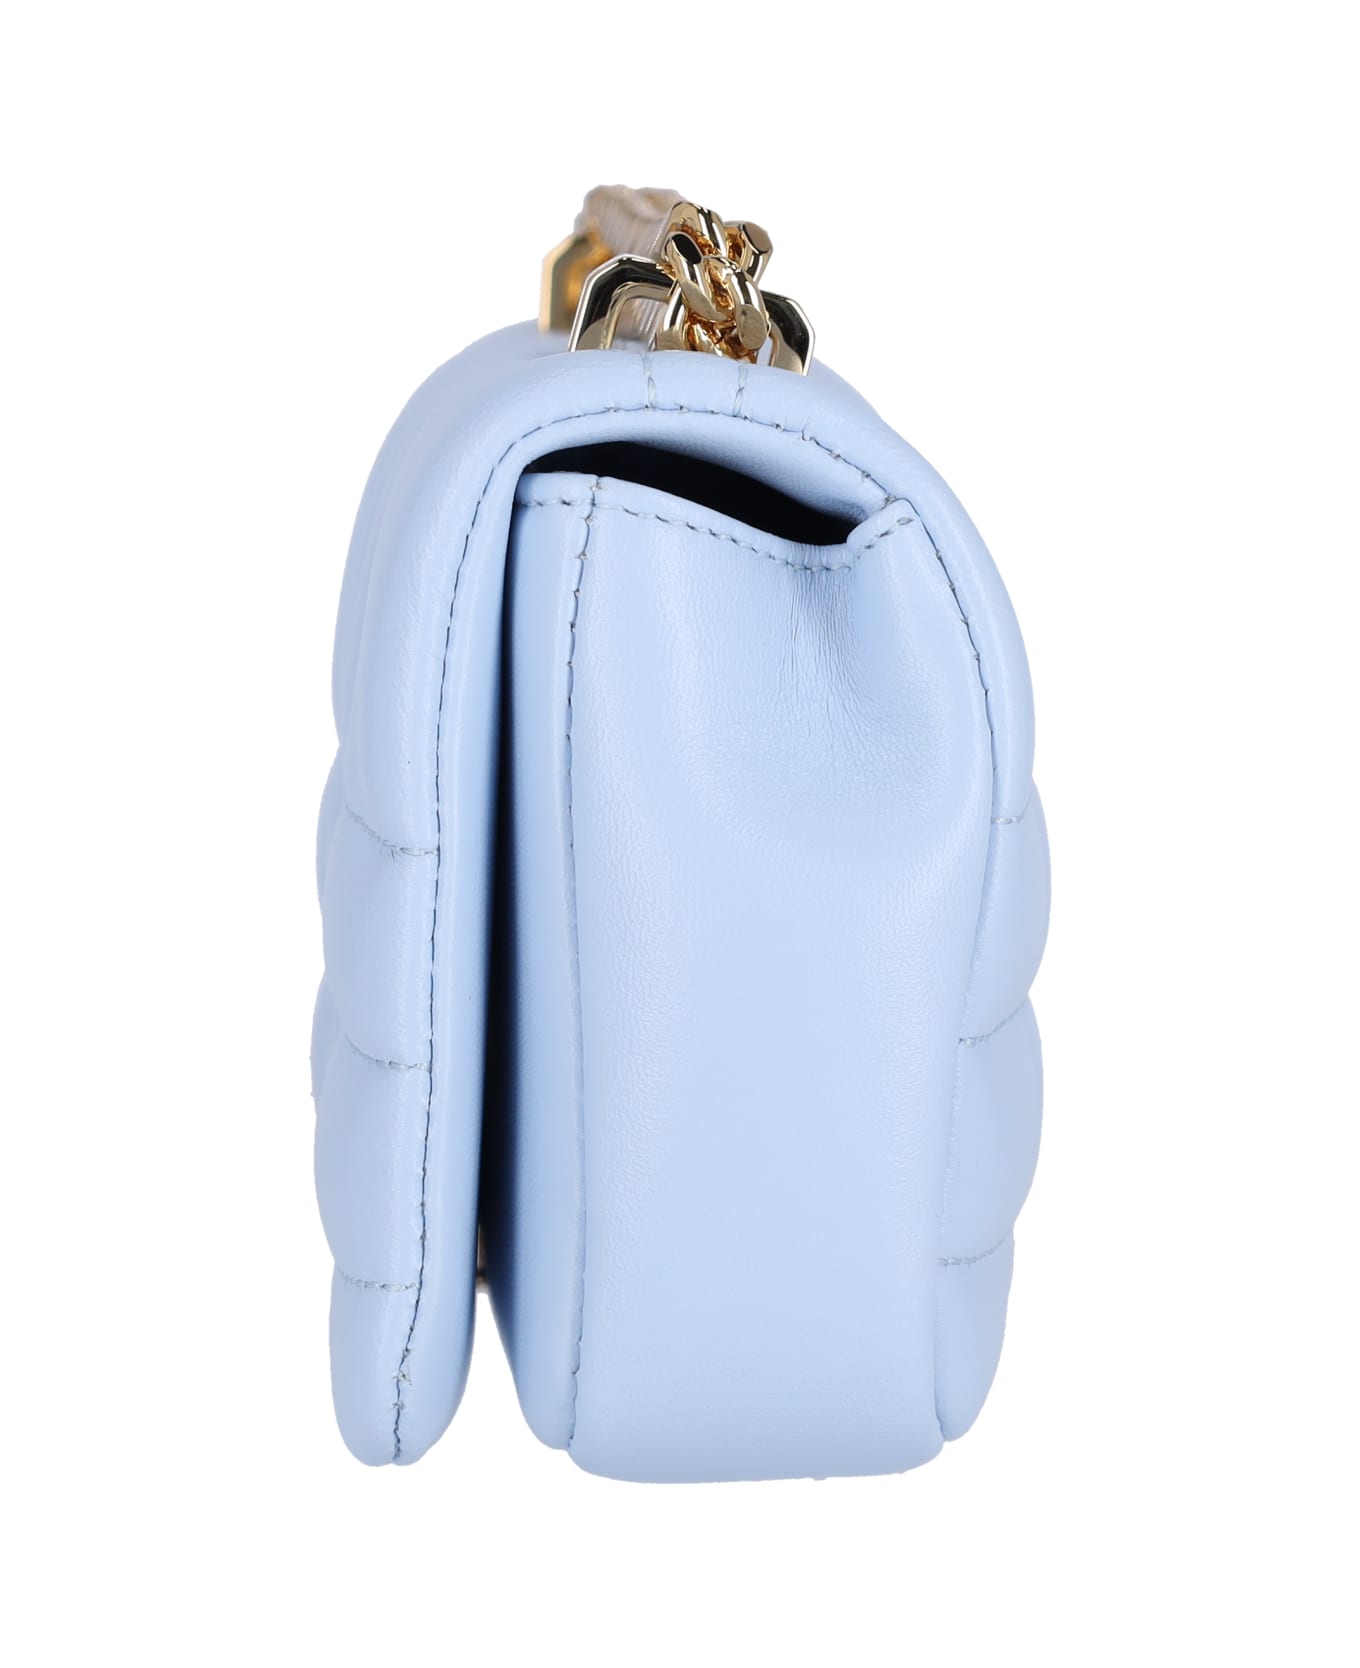 Burberry Light Blue Leather Mini Lola Shoulder Bag - Light blue ショルダーバッグ